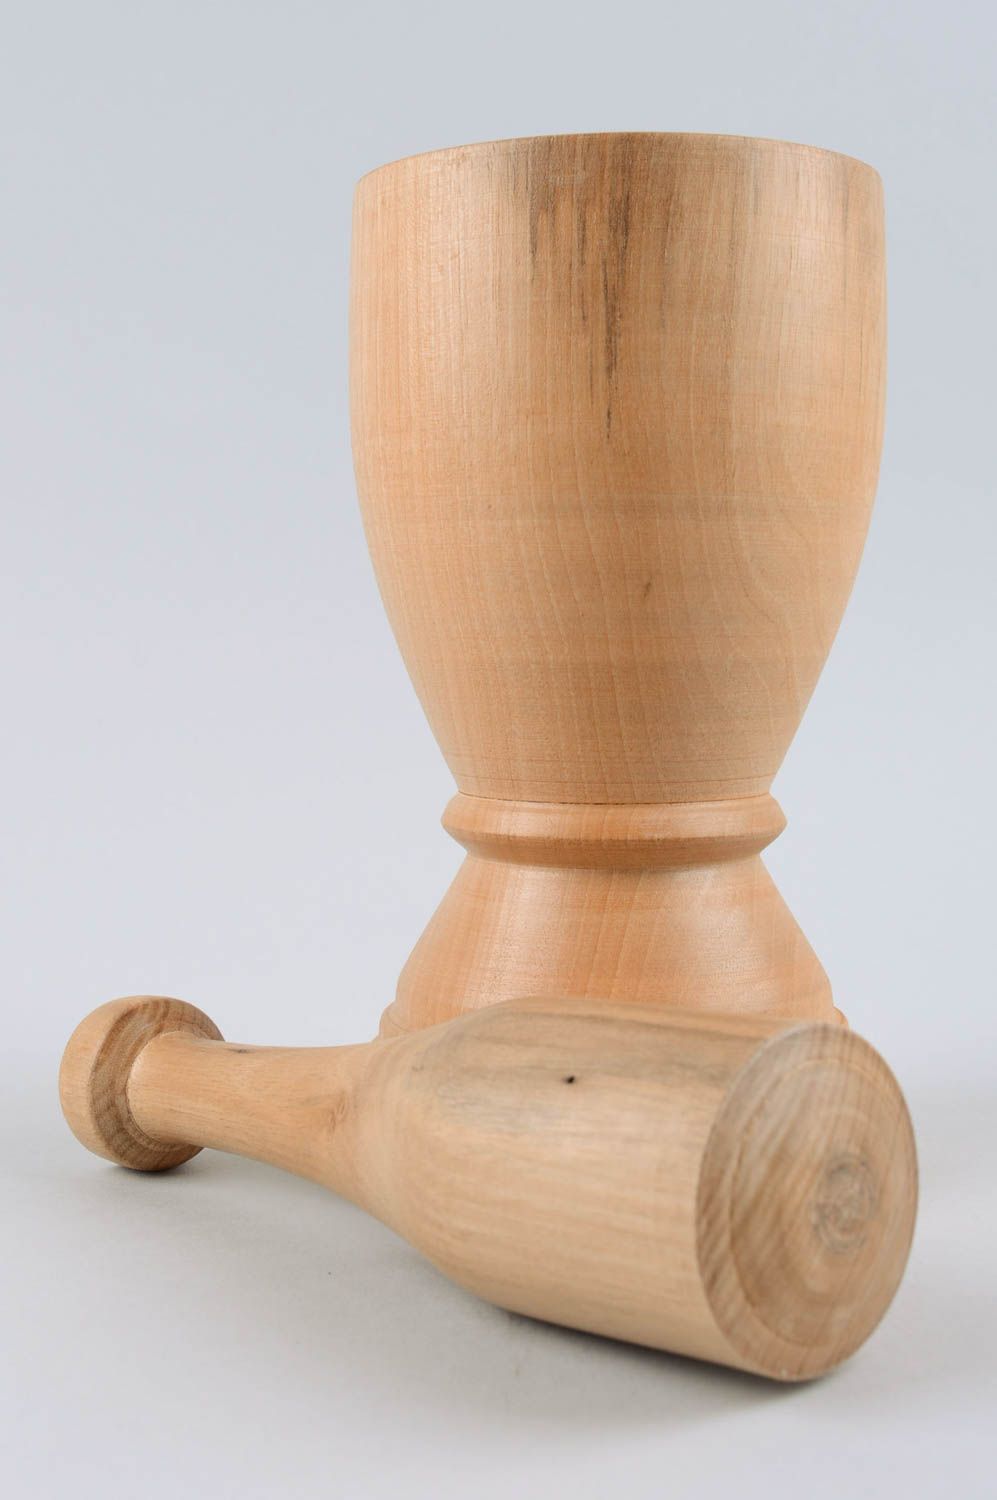 Handmade wooden kitchen utensils wooden mortar and pestle kitchen utensil  photo 4